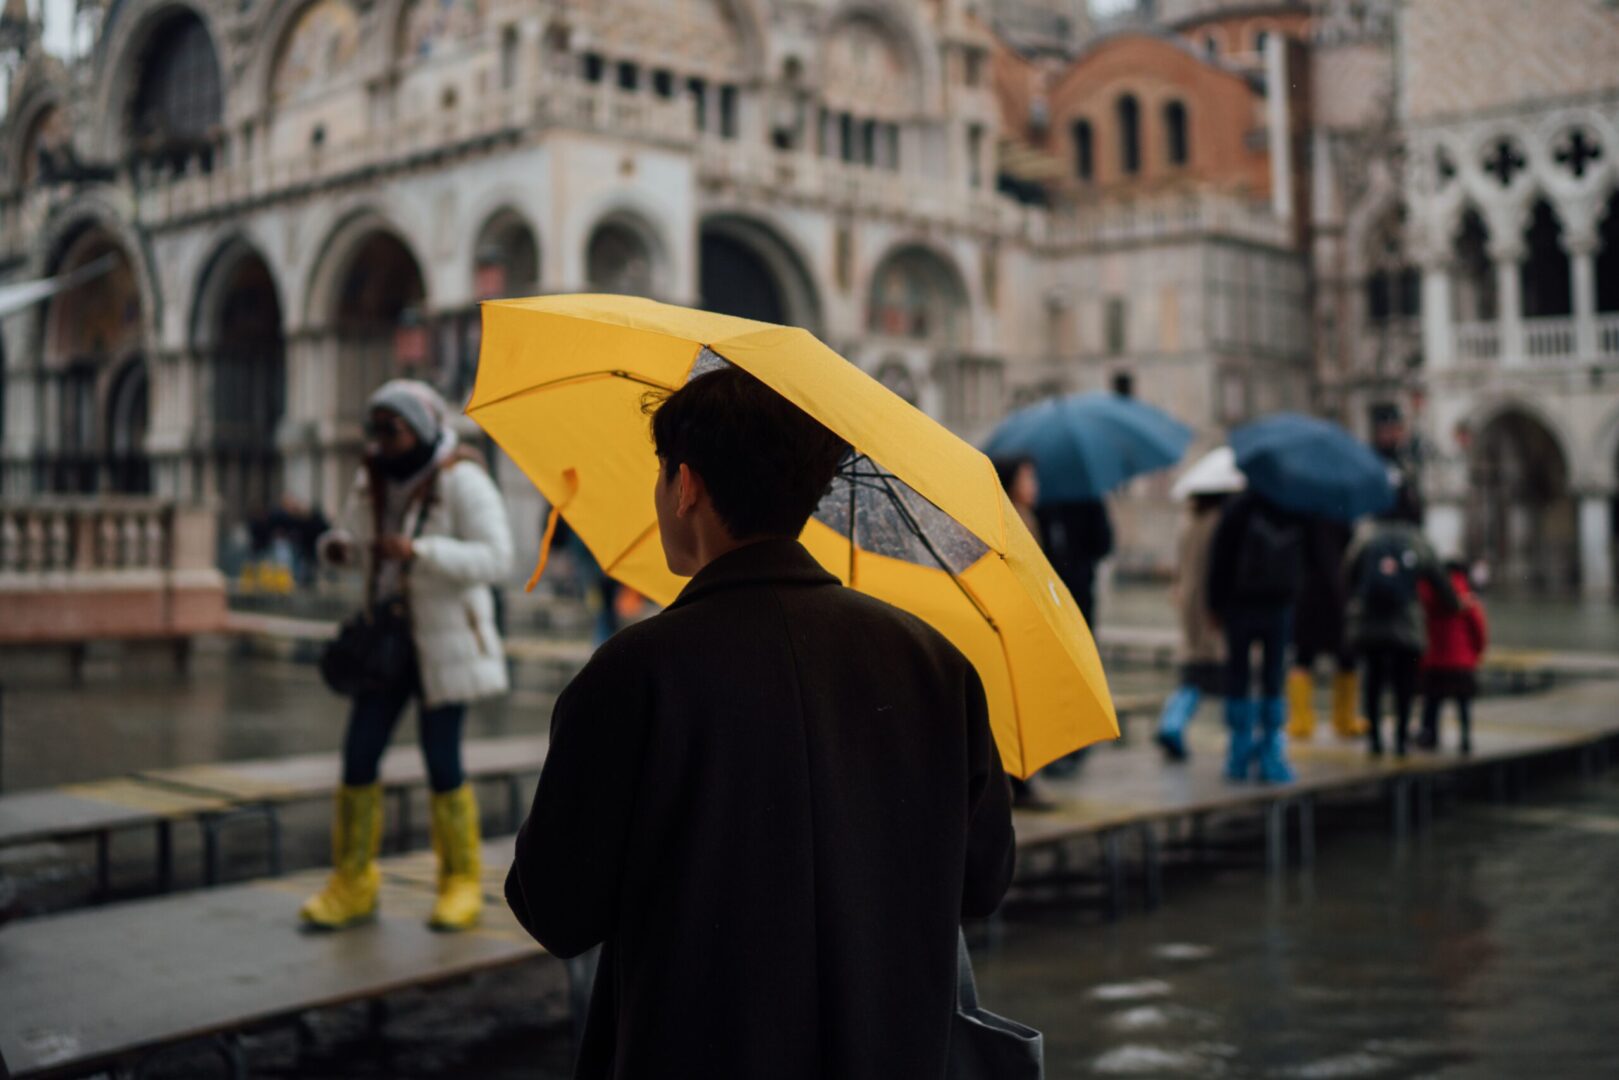 using an umbrella in the rain